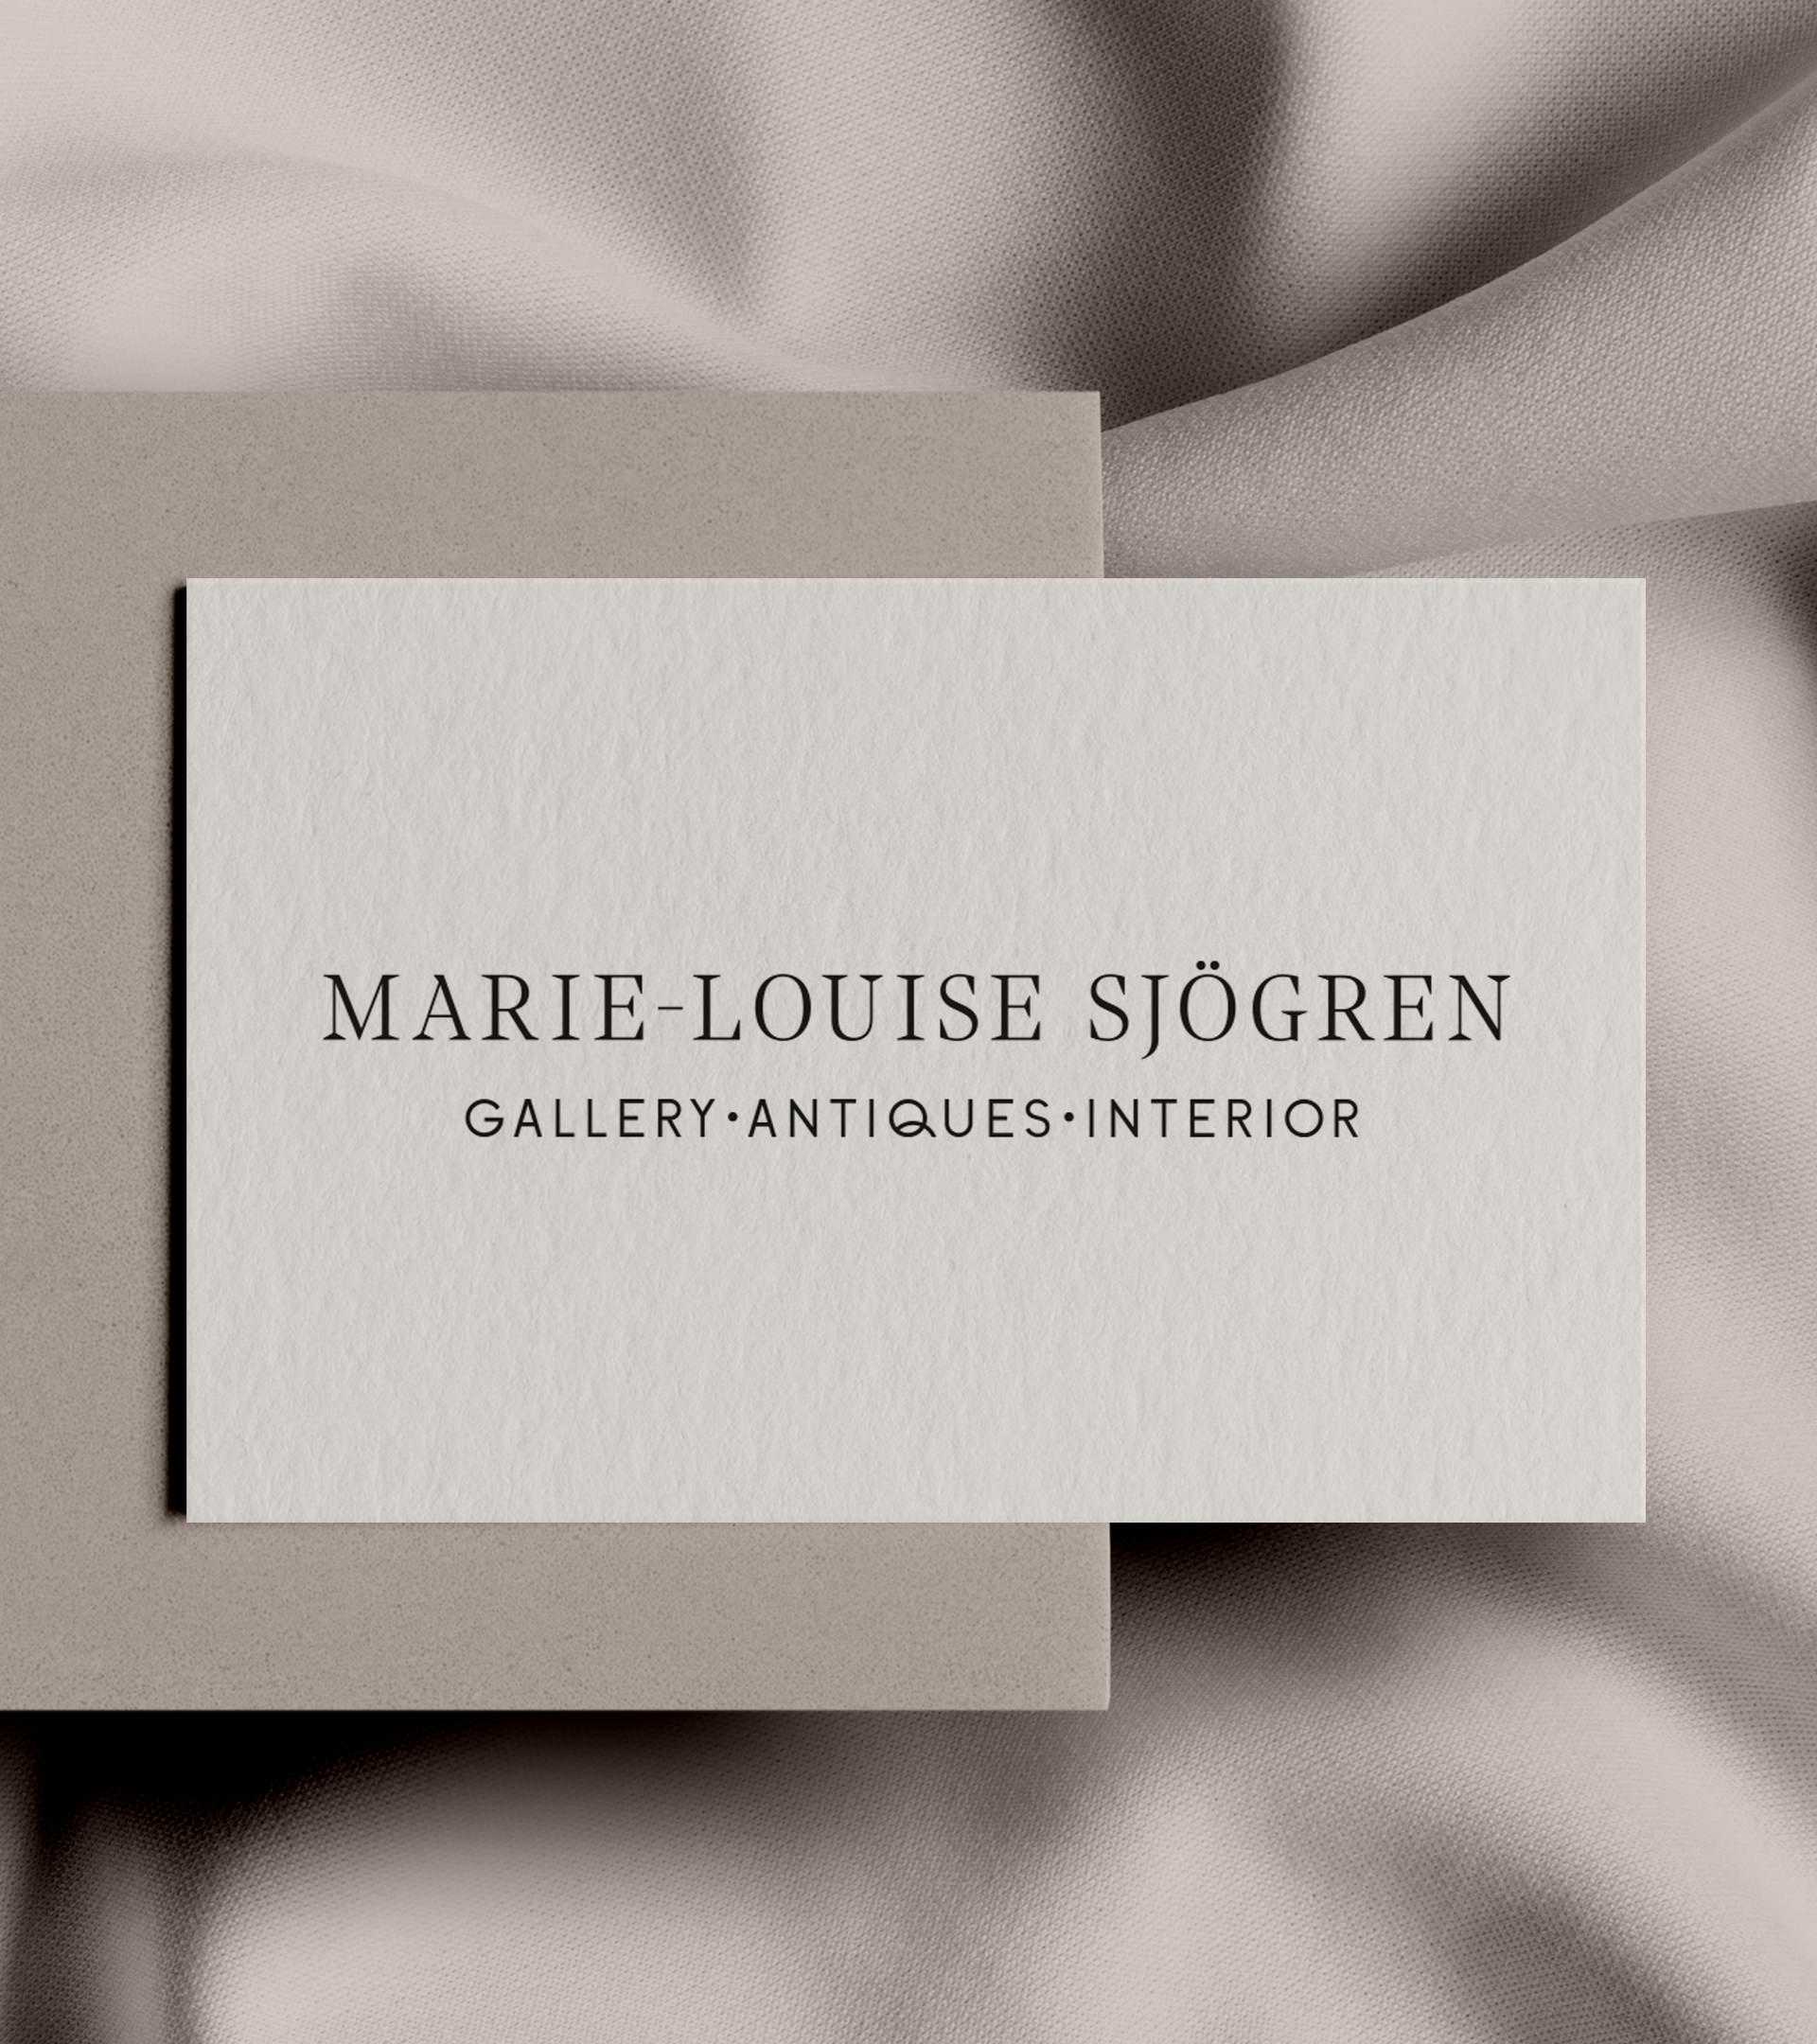 Business card for Marie-Louise Sjögren designed by Studio Poi